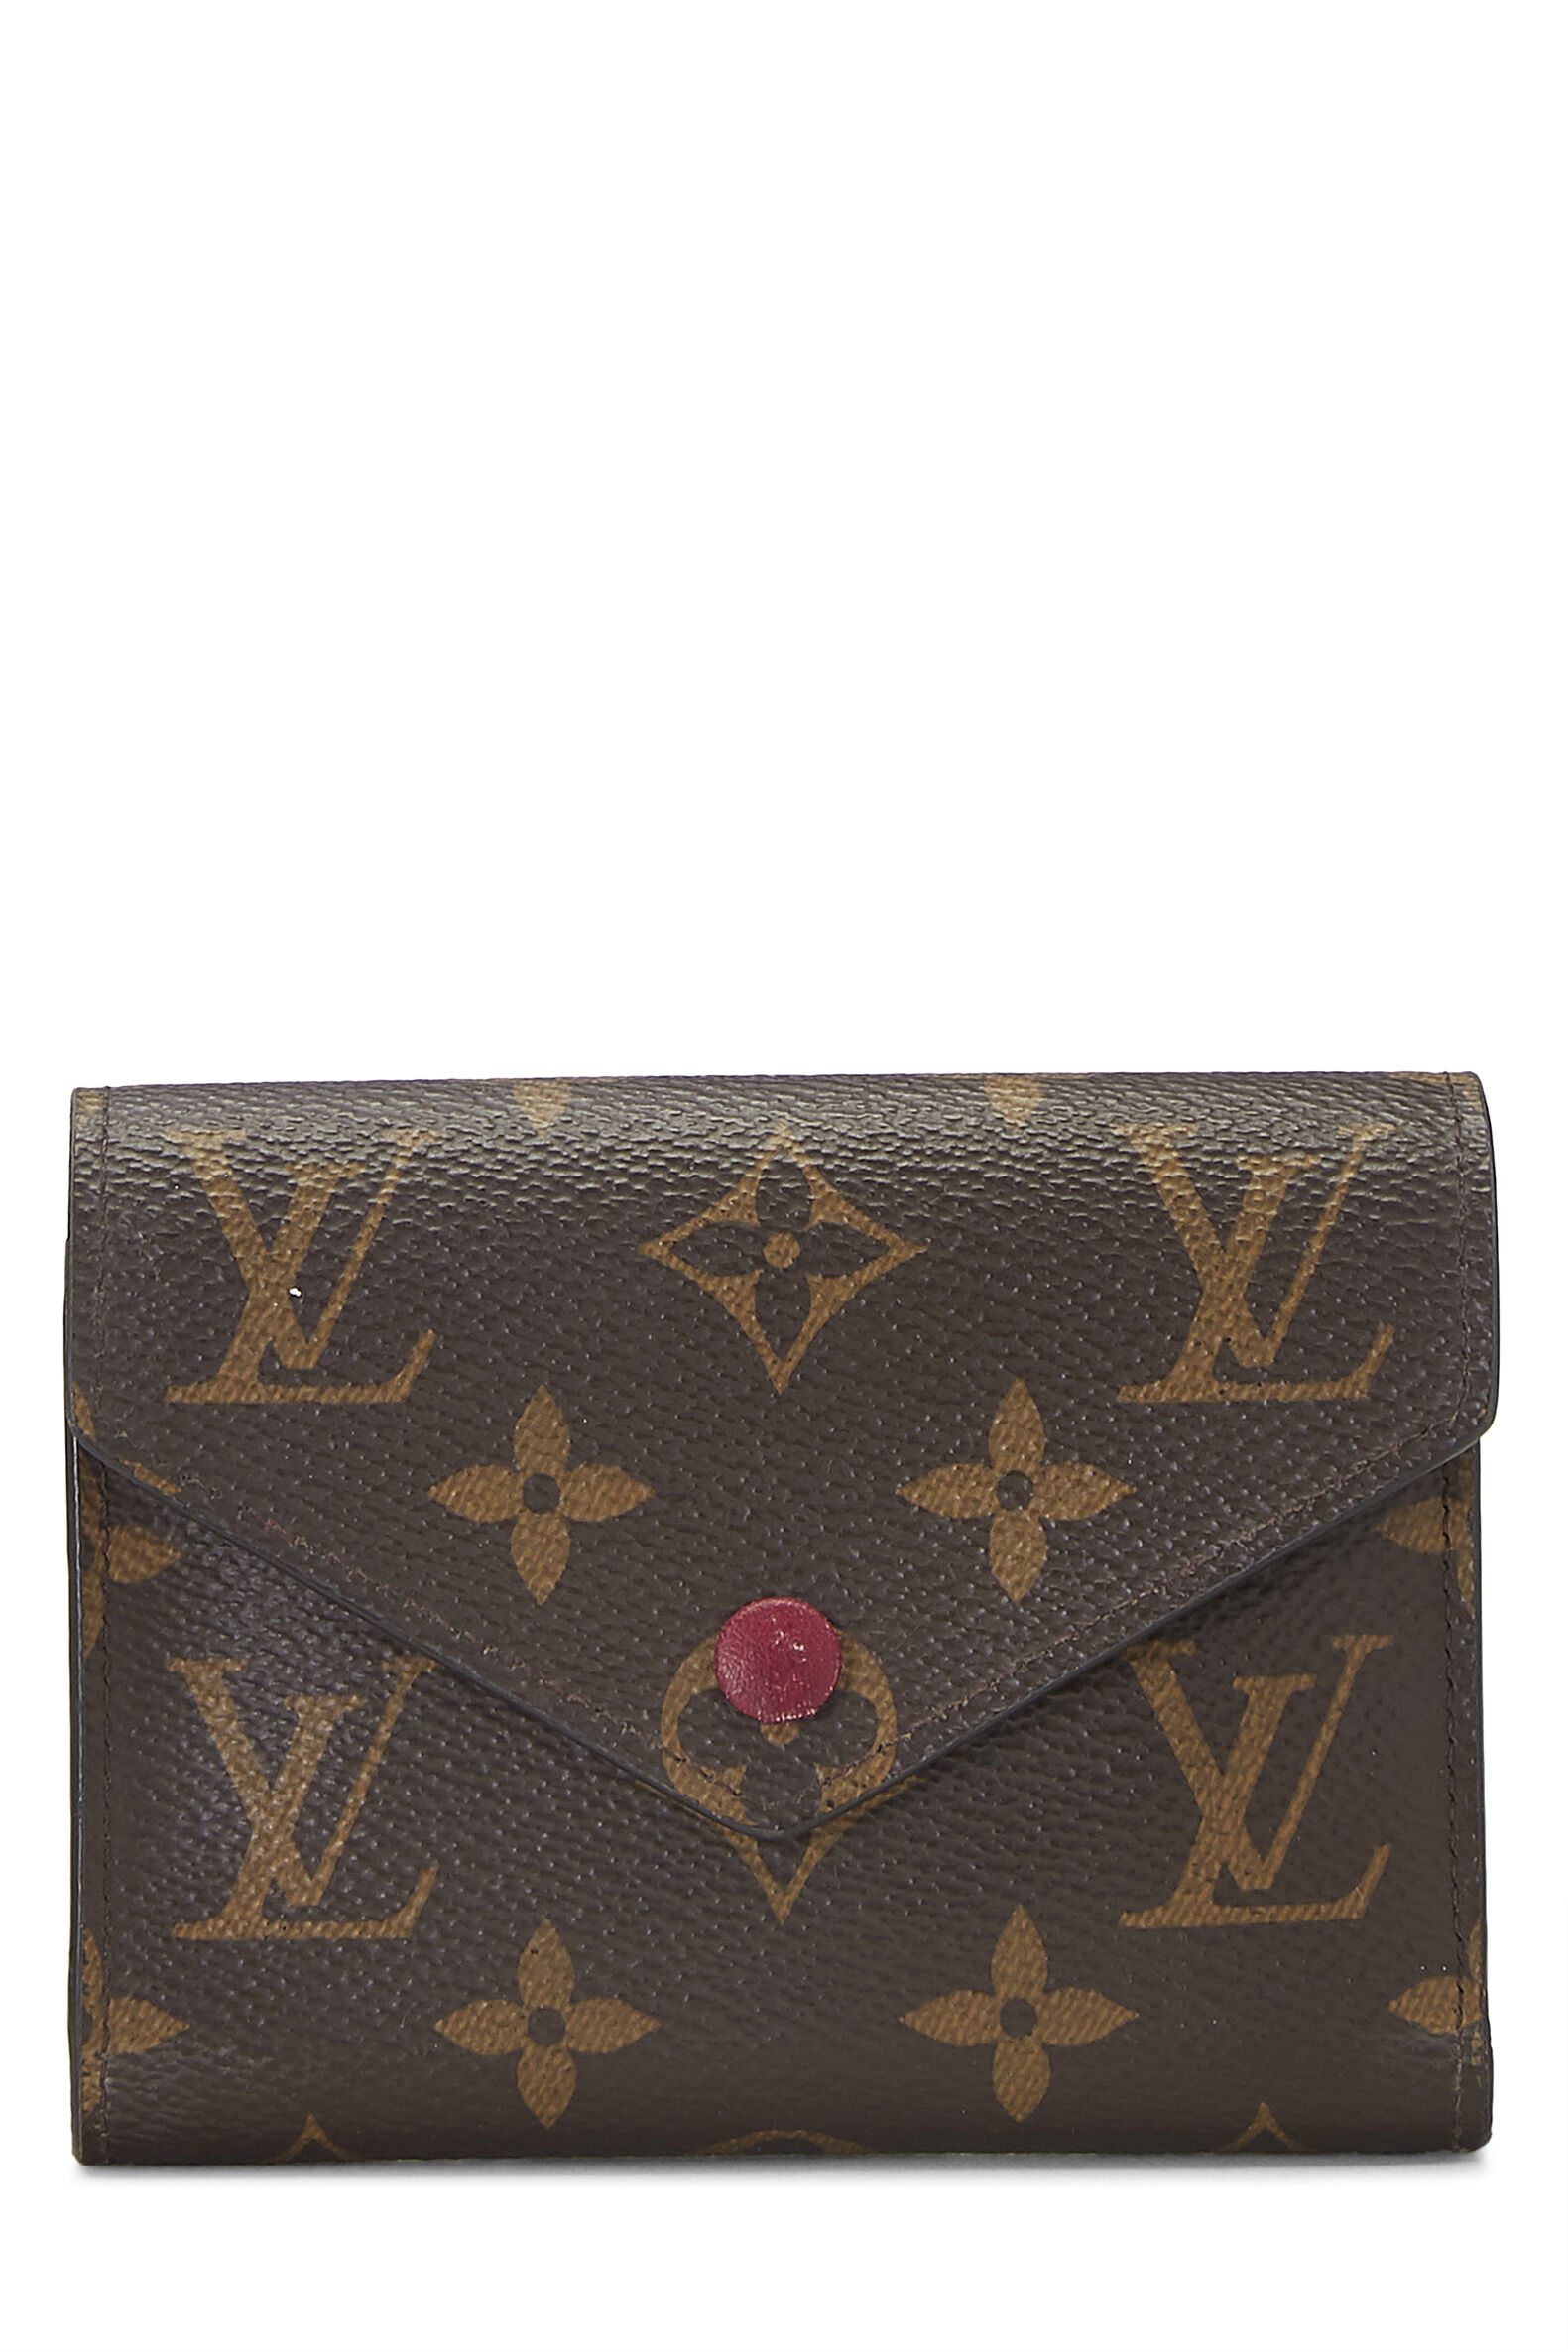 Louis Vuitton Monogram Canvas Victorine Wallet With Flower Charm M64203